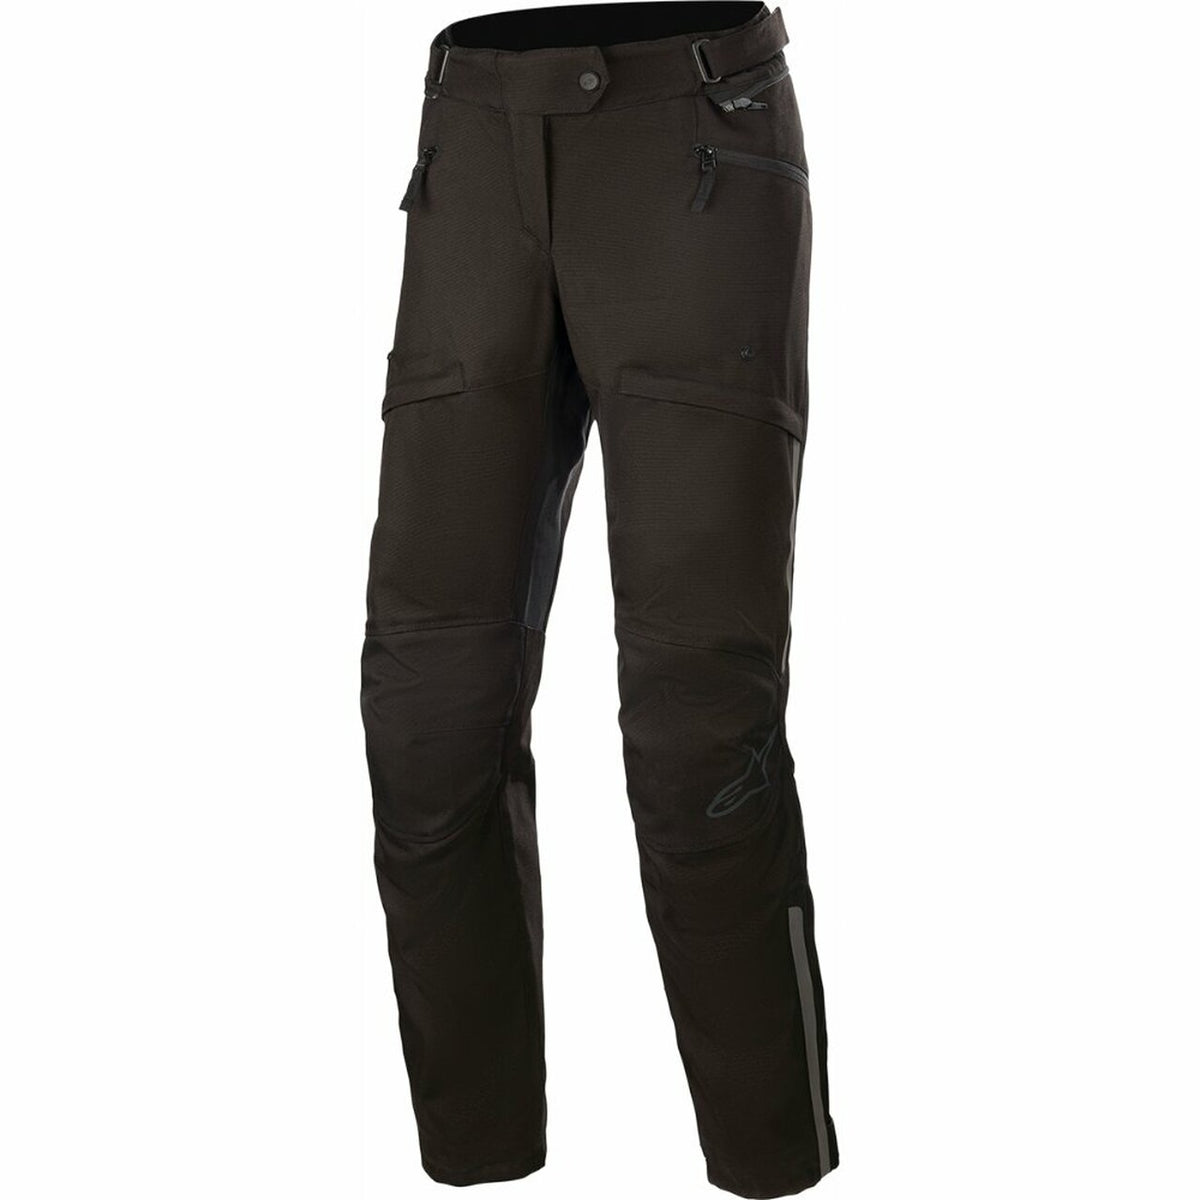 Pantalon imperméable Alpinestars AST-1 V2 pour femme